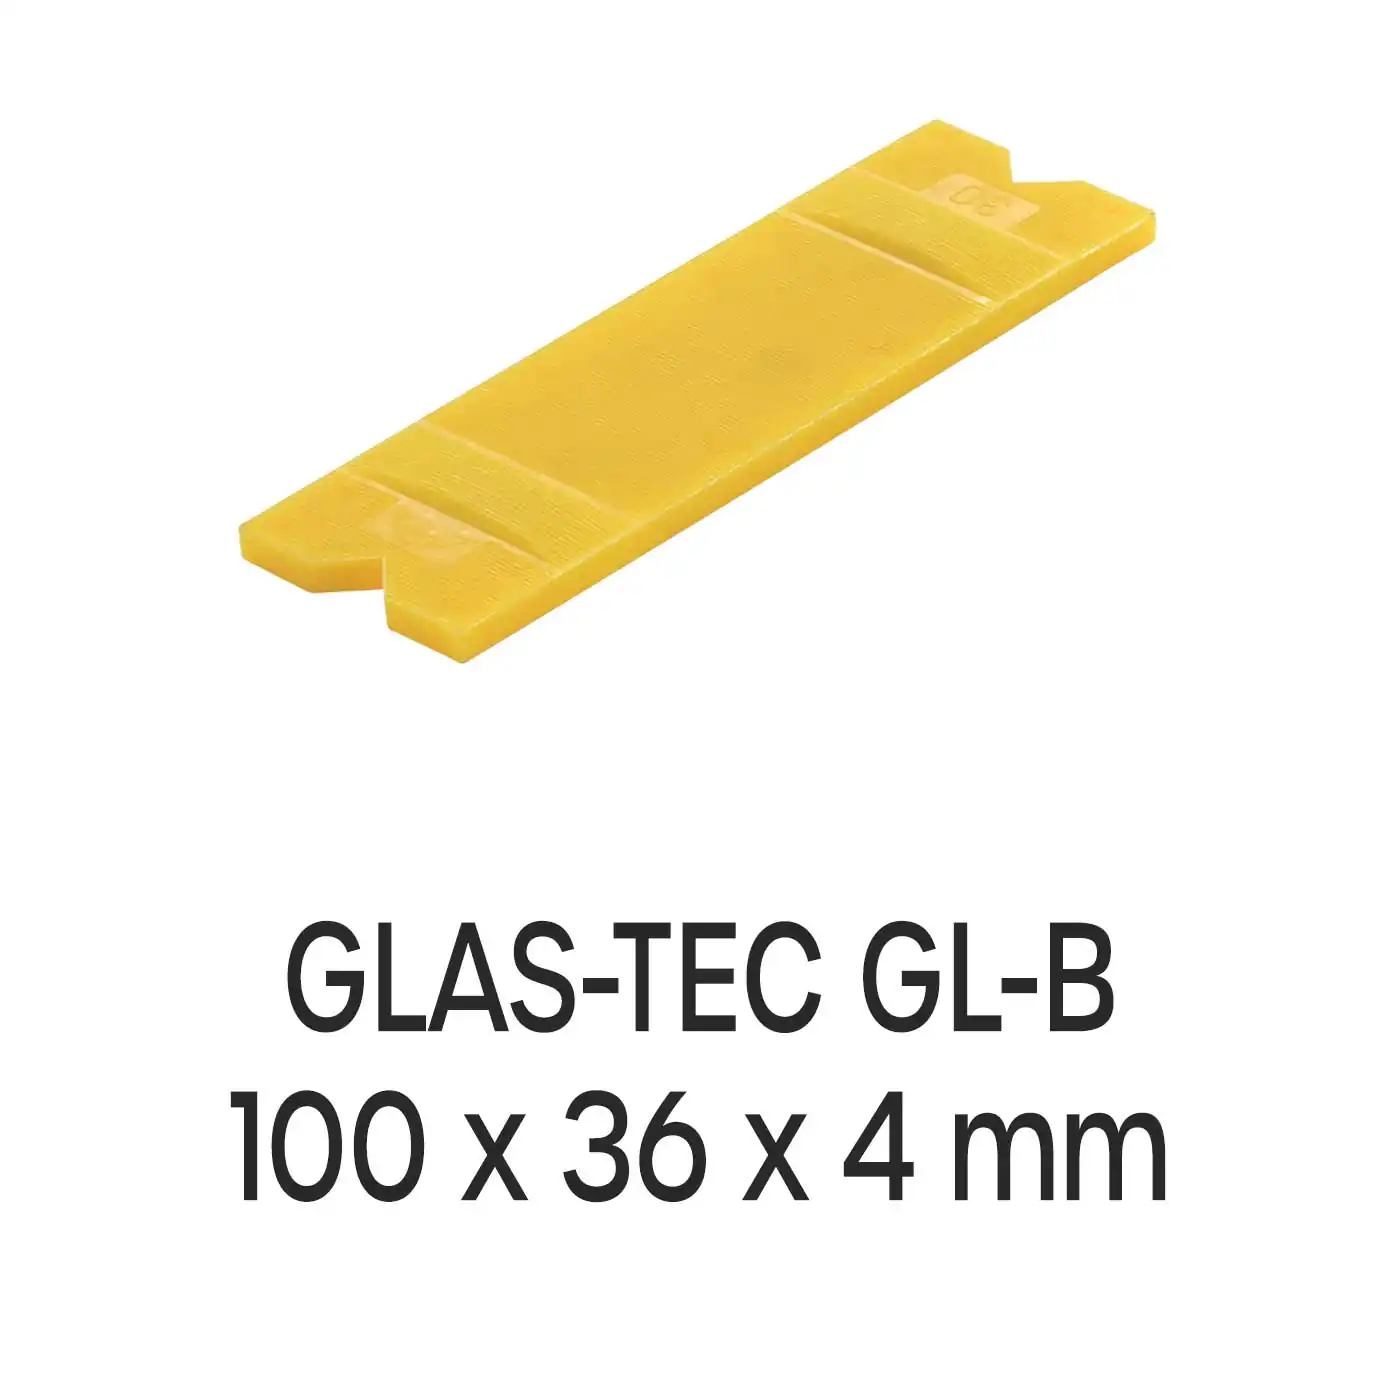 Roto GLAS-TEC GL-B 100 x 36 x 4 mm Verglasungsklötze 500 Stück